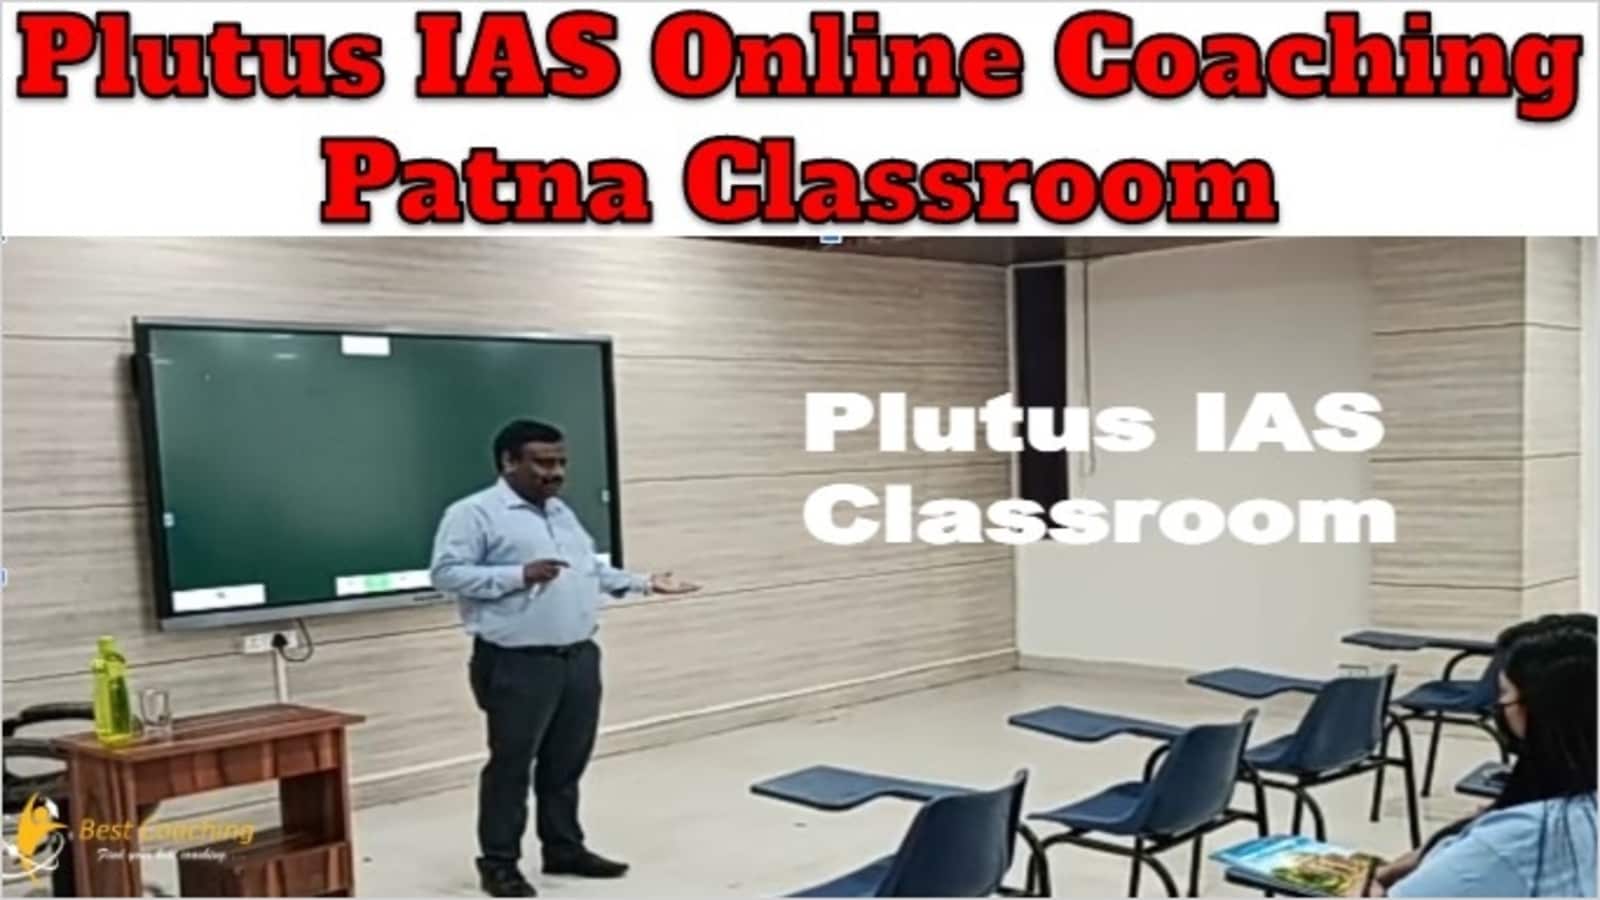 Plutus IAS Online Coaching Patna Classroom